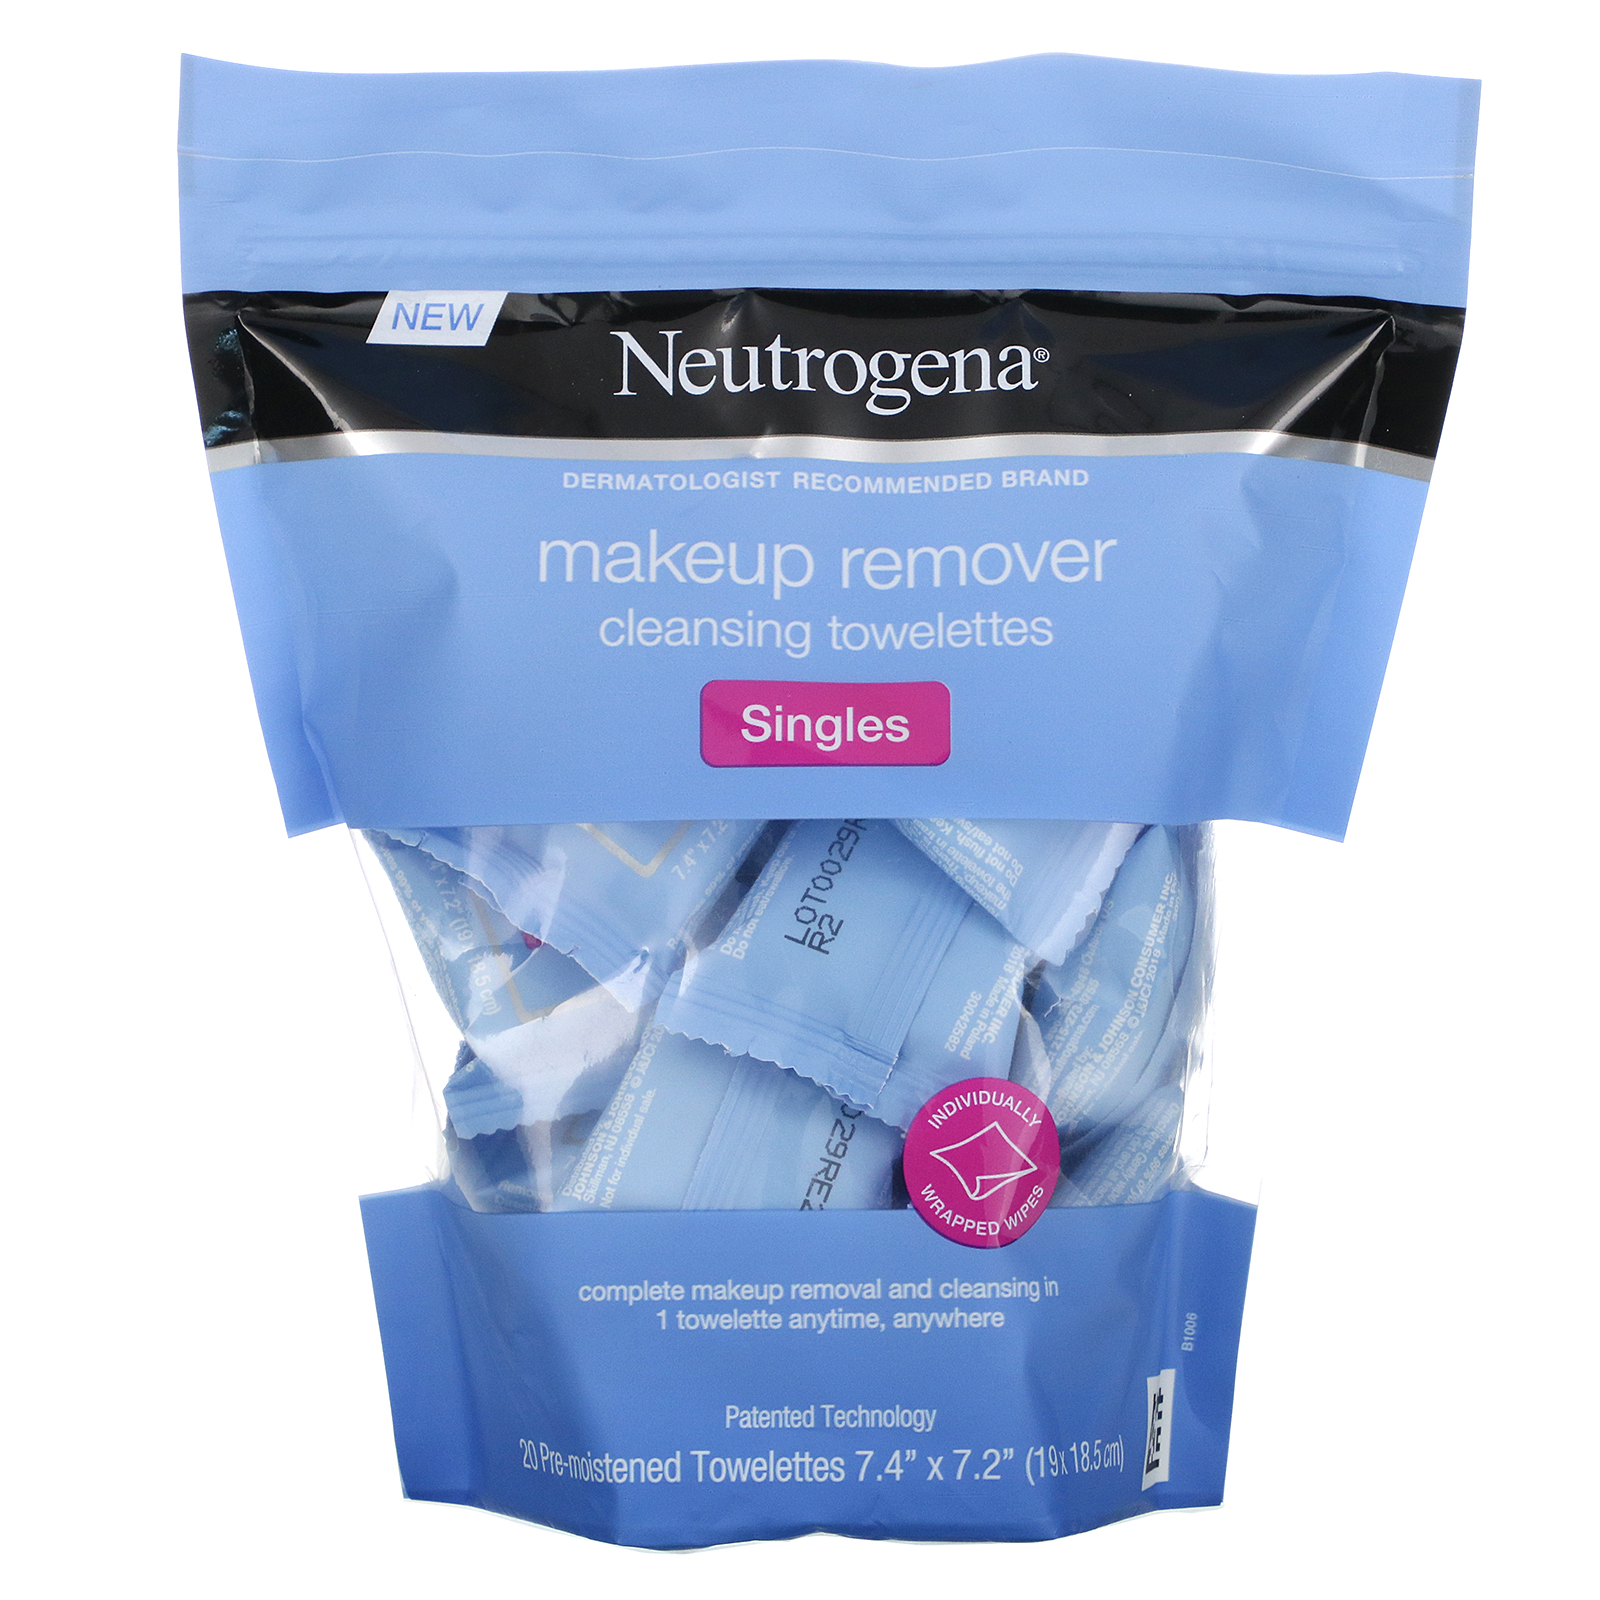 Neutrogena Makeup Remover クレンジングタオルをCheck✔️